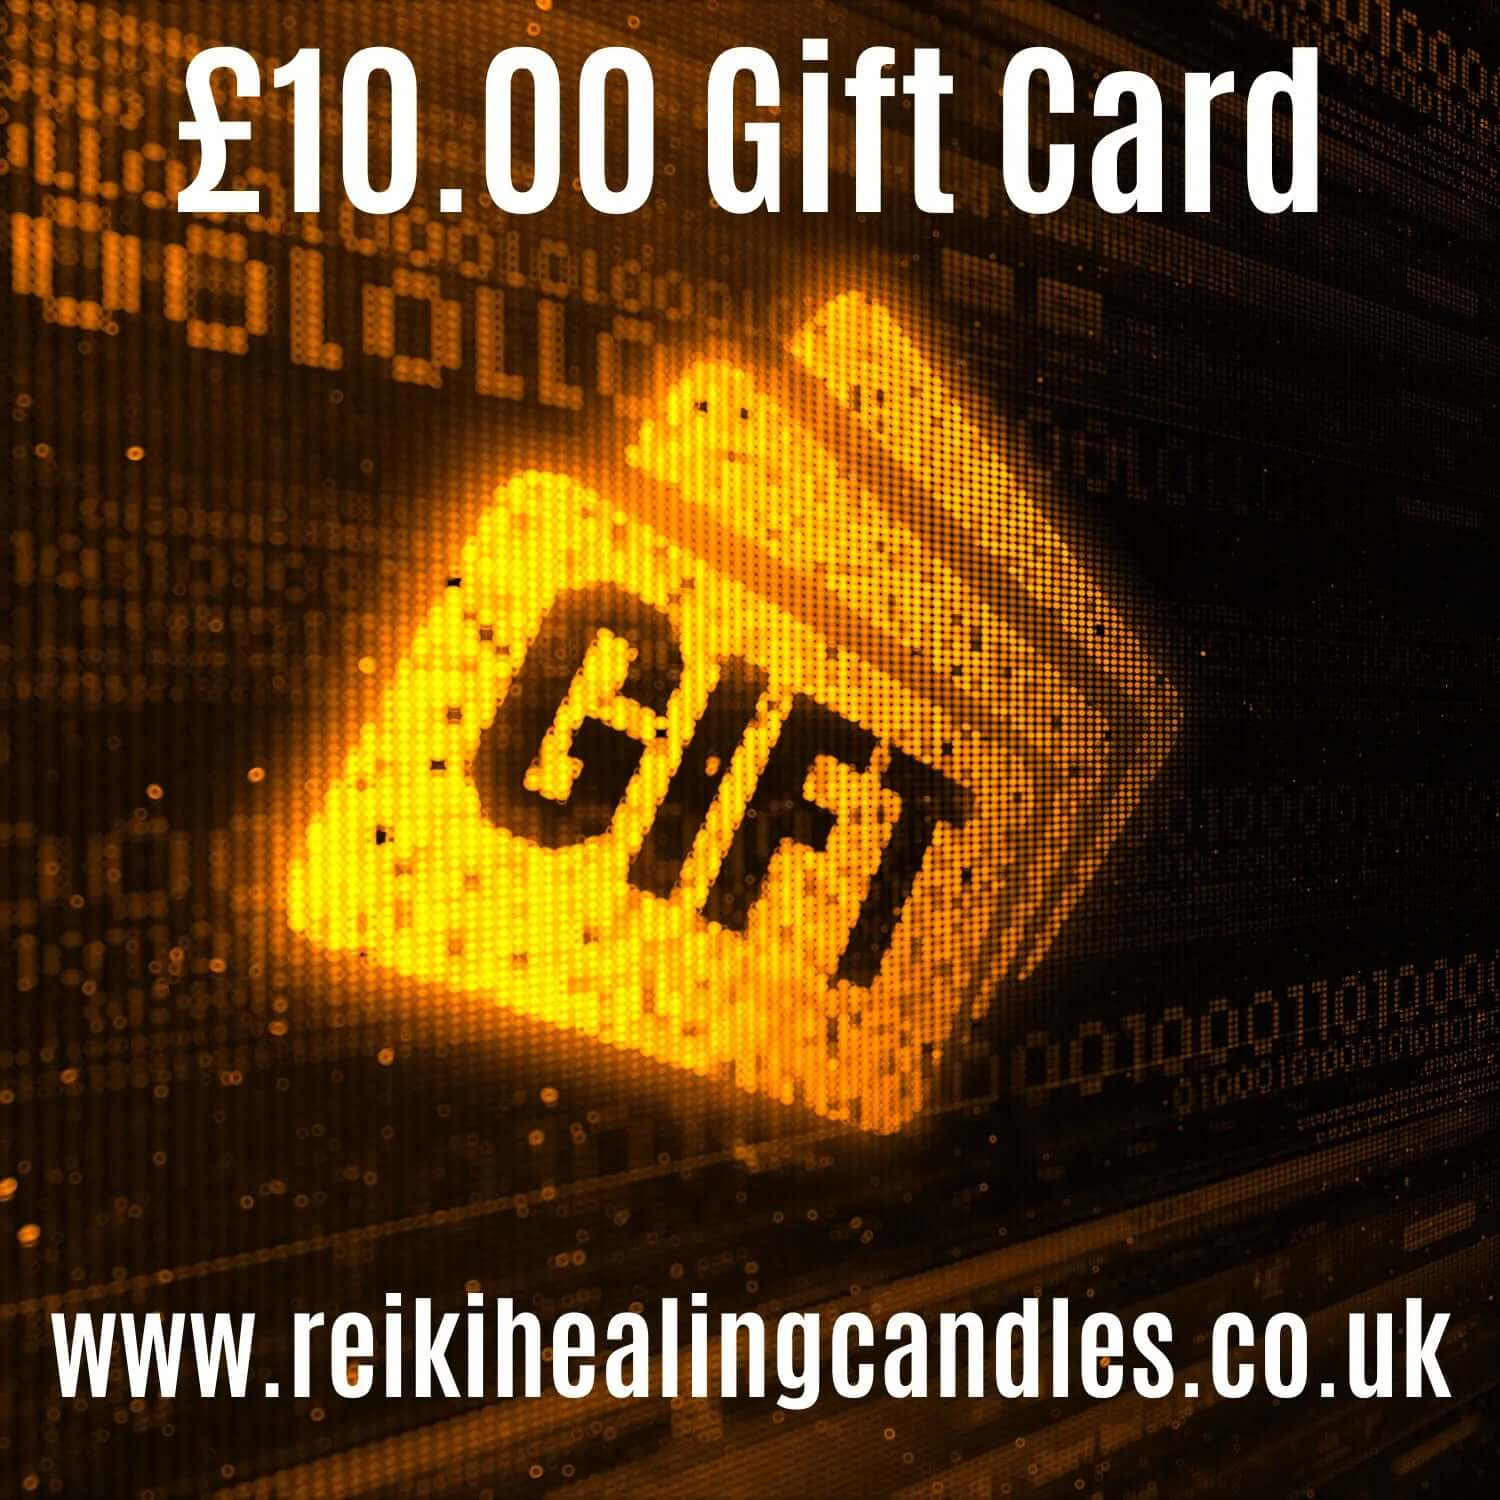 Reiki Healing Candle Gift Card Reiki Healing Candles